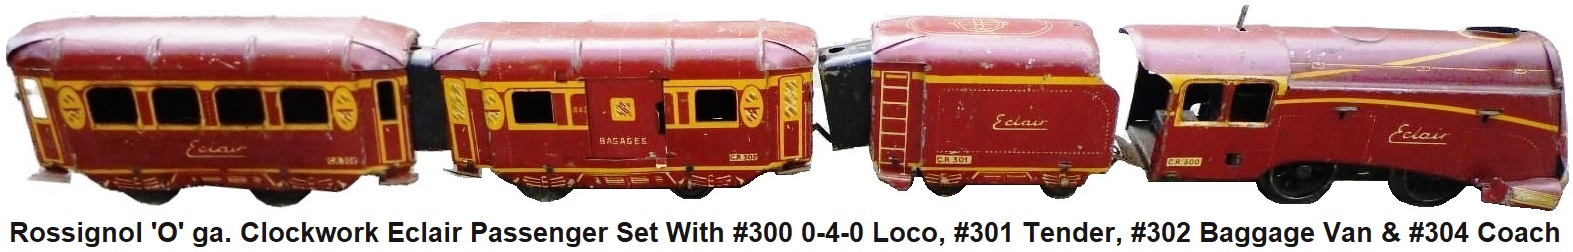 Rossignol CR 'O' gauge Clockwork Eclair Passenger Set with #300 0-4-0 Locomotive, #301 Tender, #302 Baggage Van and #304 Coach